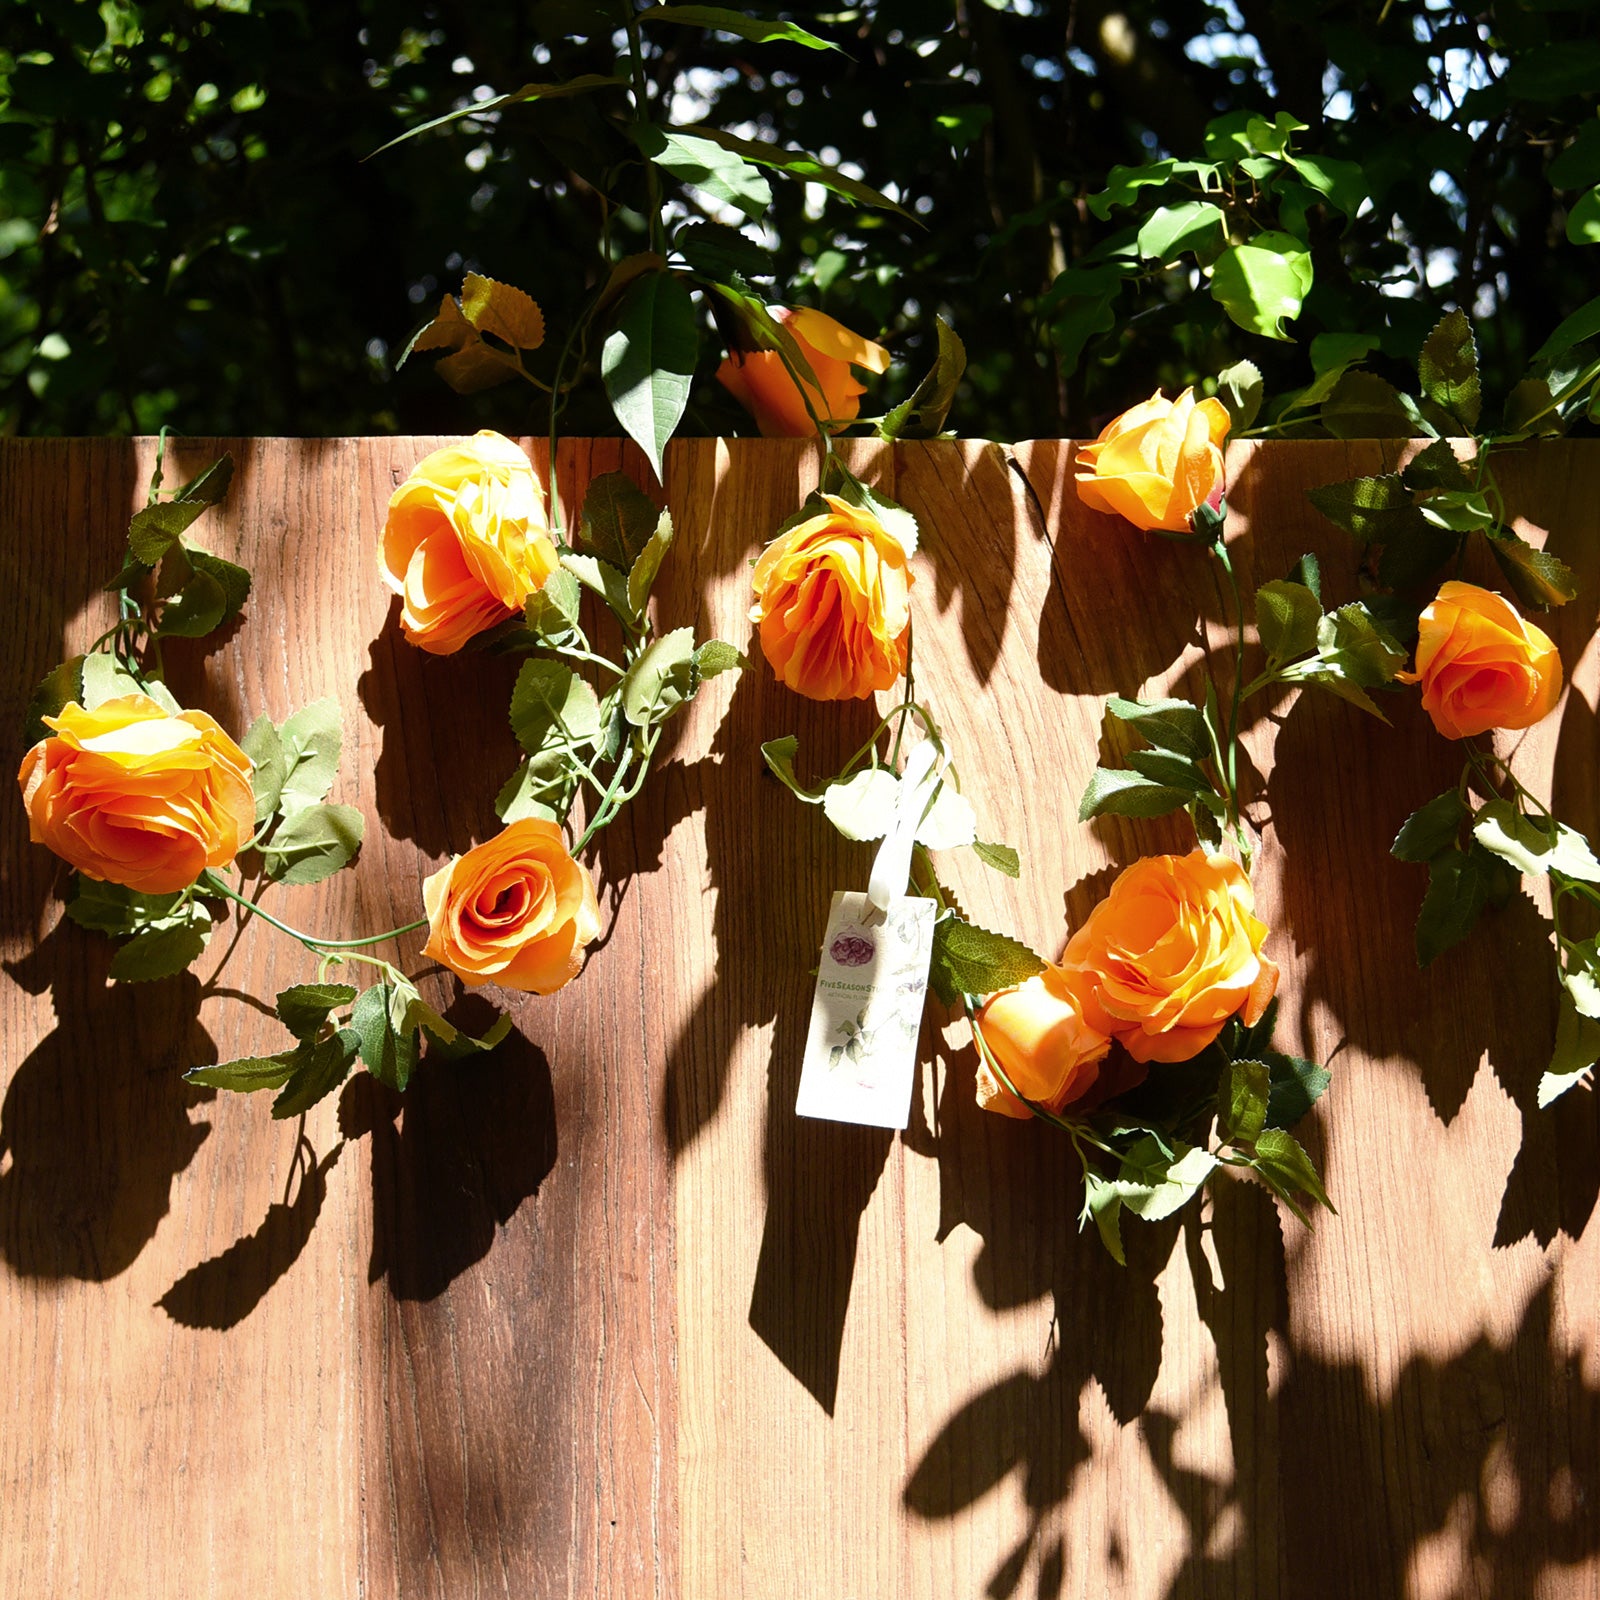 Artificial Silk Rose Garlands Vine Plant Flower Leaves (Mandarin Orange) 2 Pcs